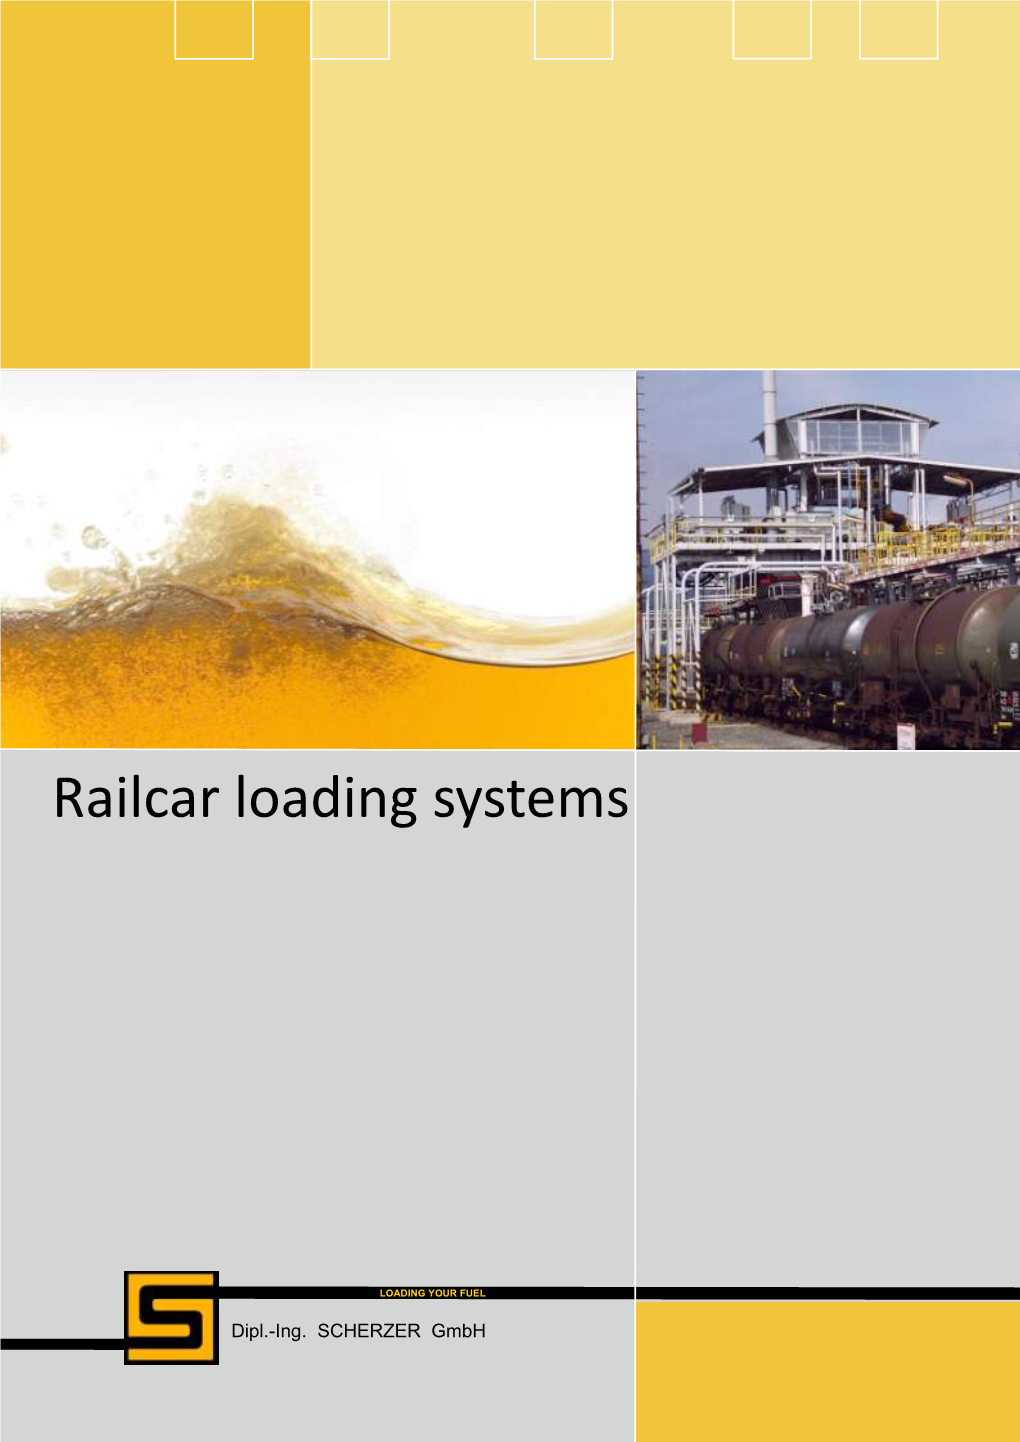 Railcar Loading Systems Company Profile